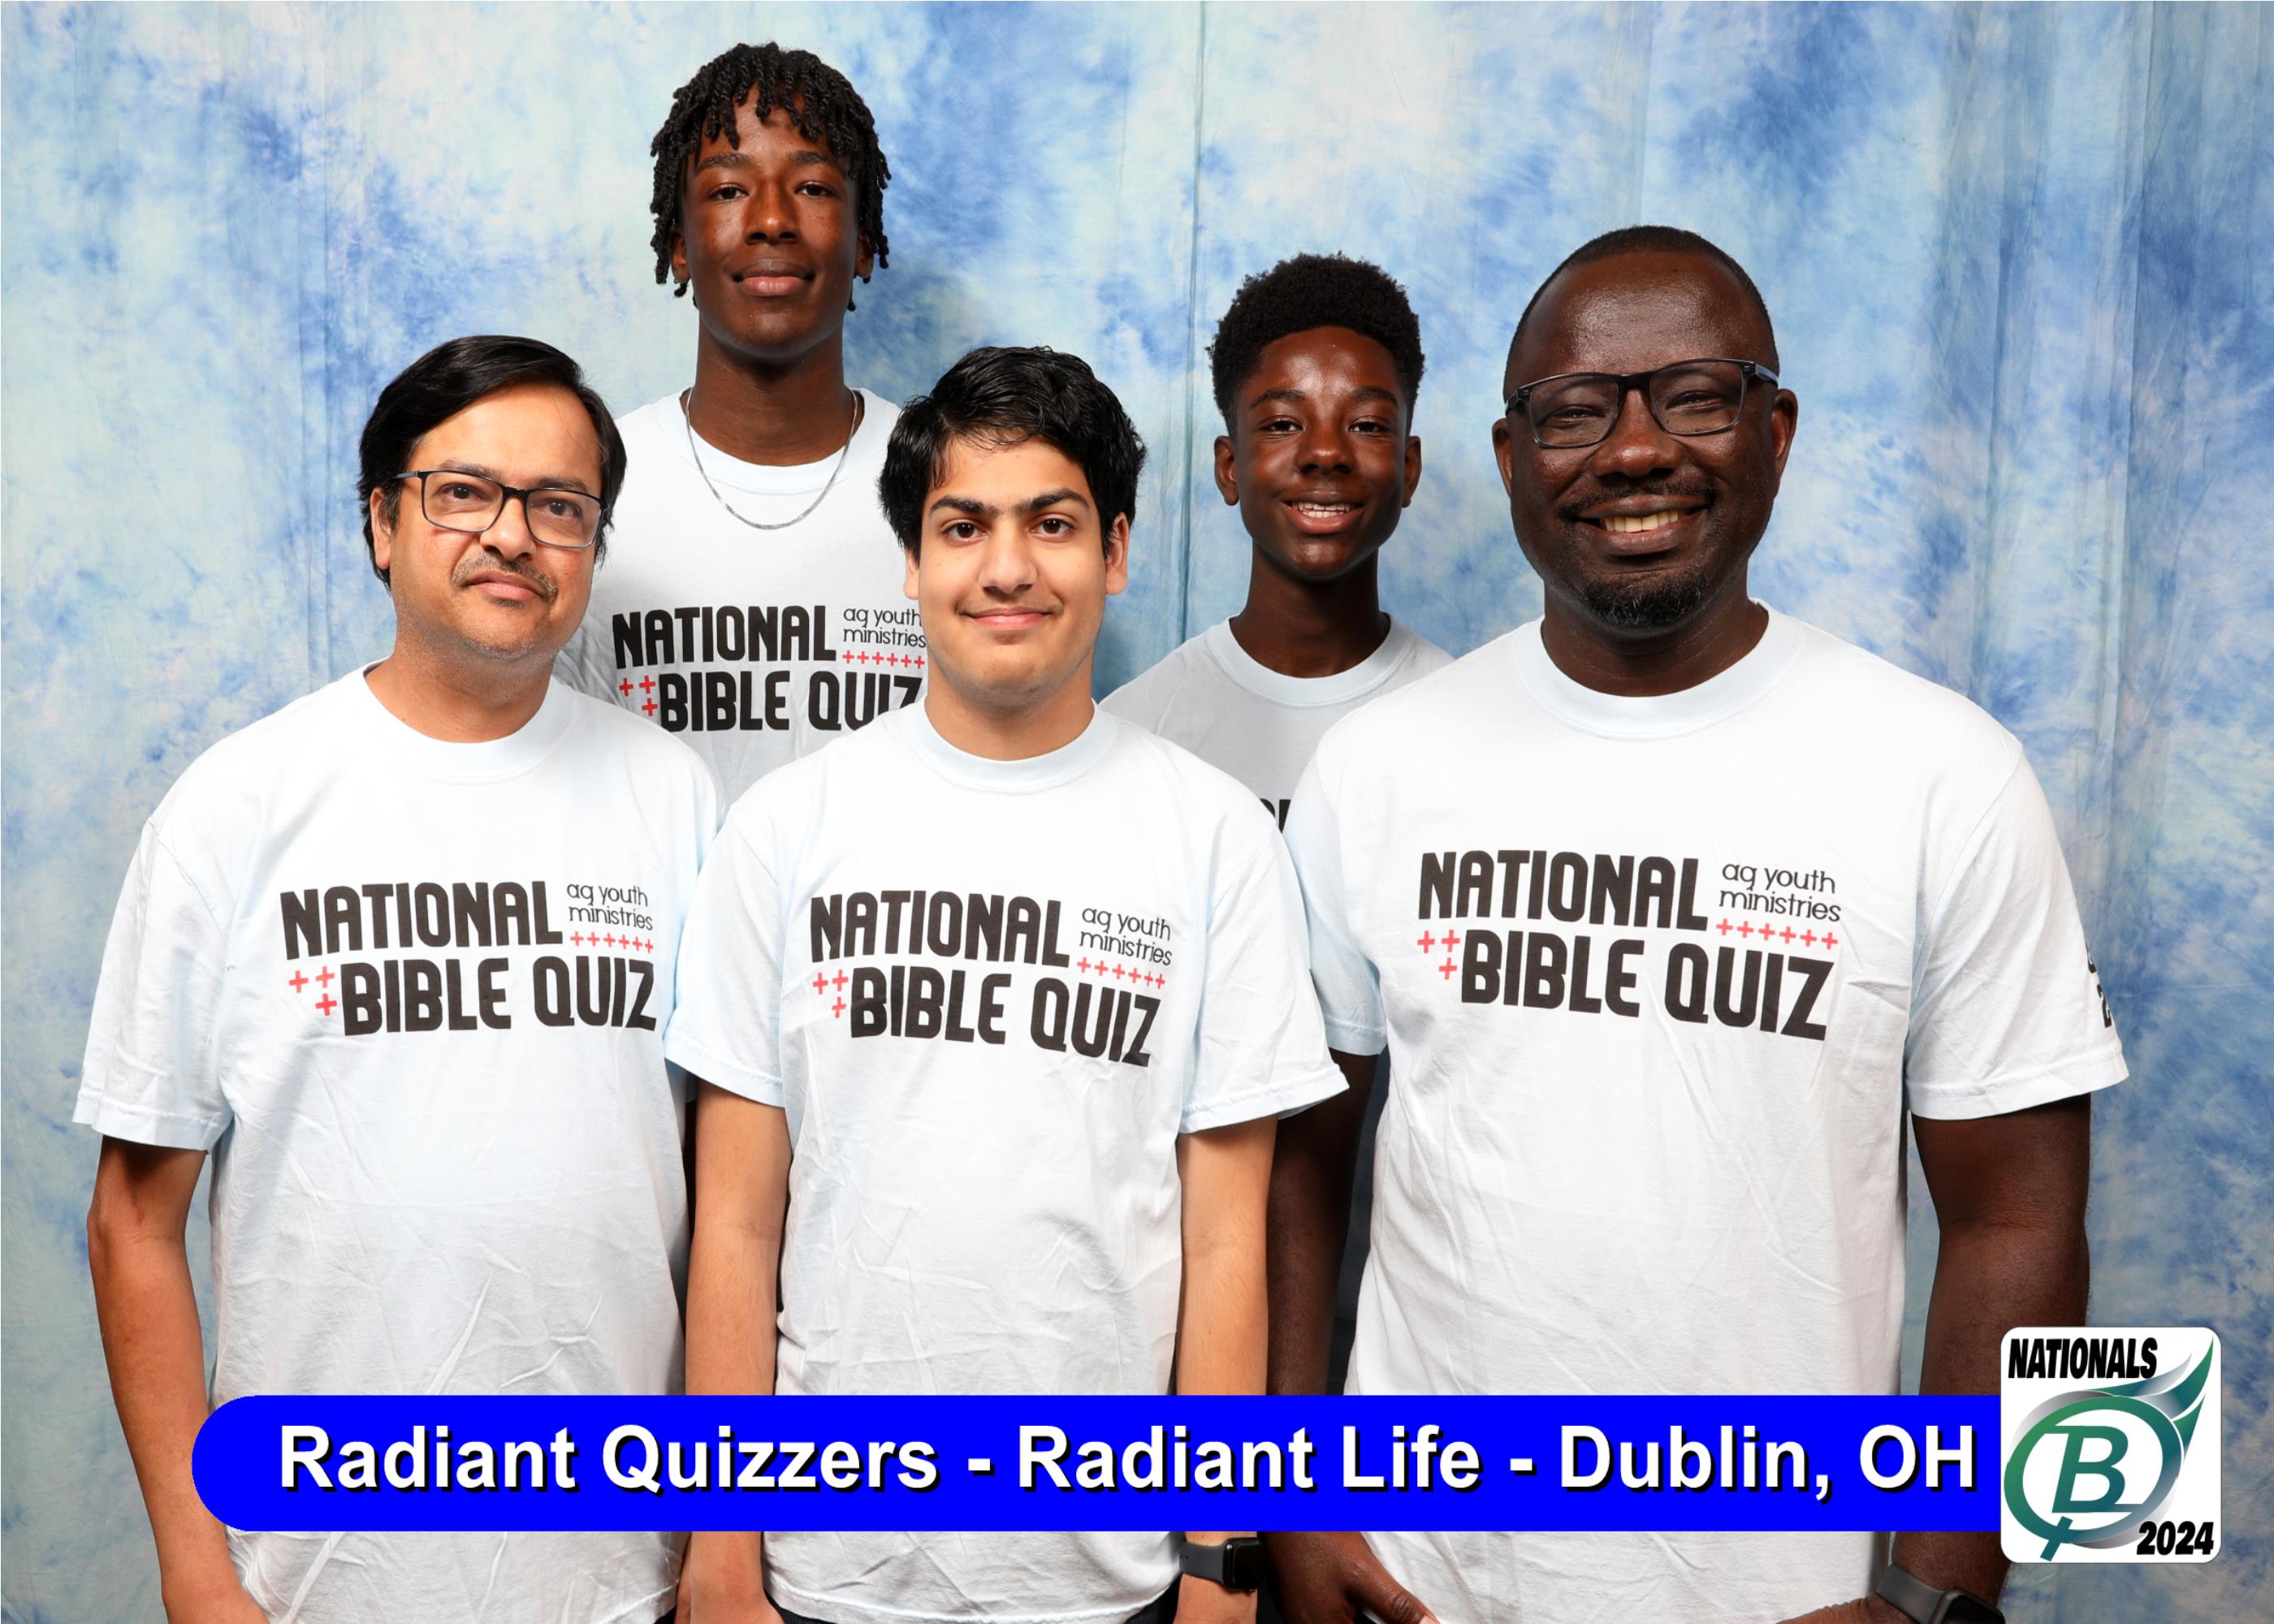 Dublin, Ohio’s Radiant Life Church wins 2024 Teen Bible Quiz National Finals